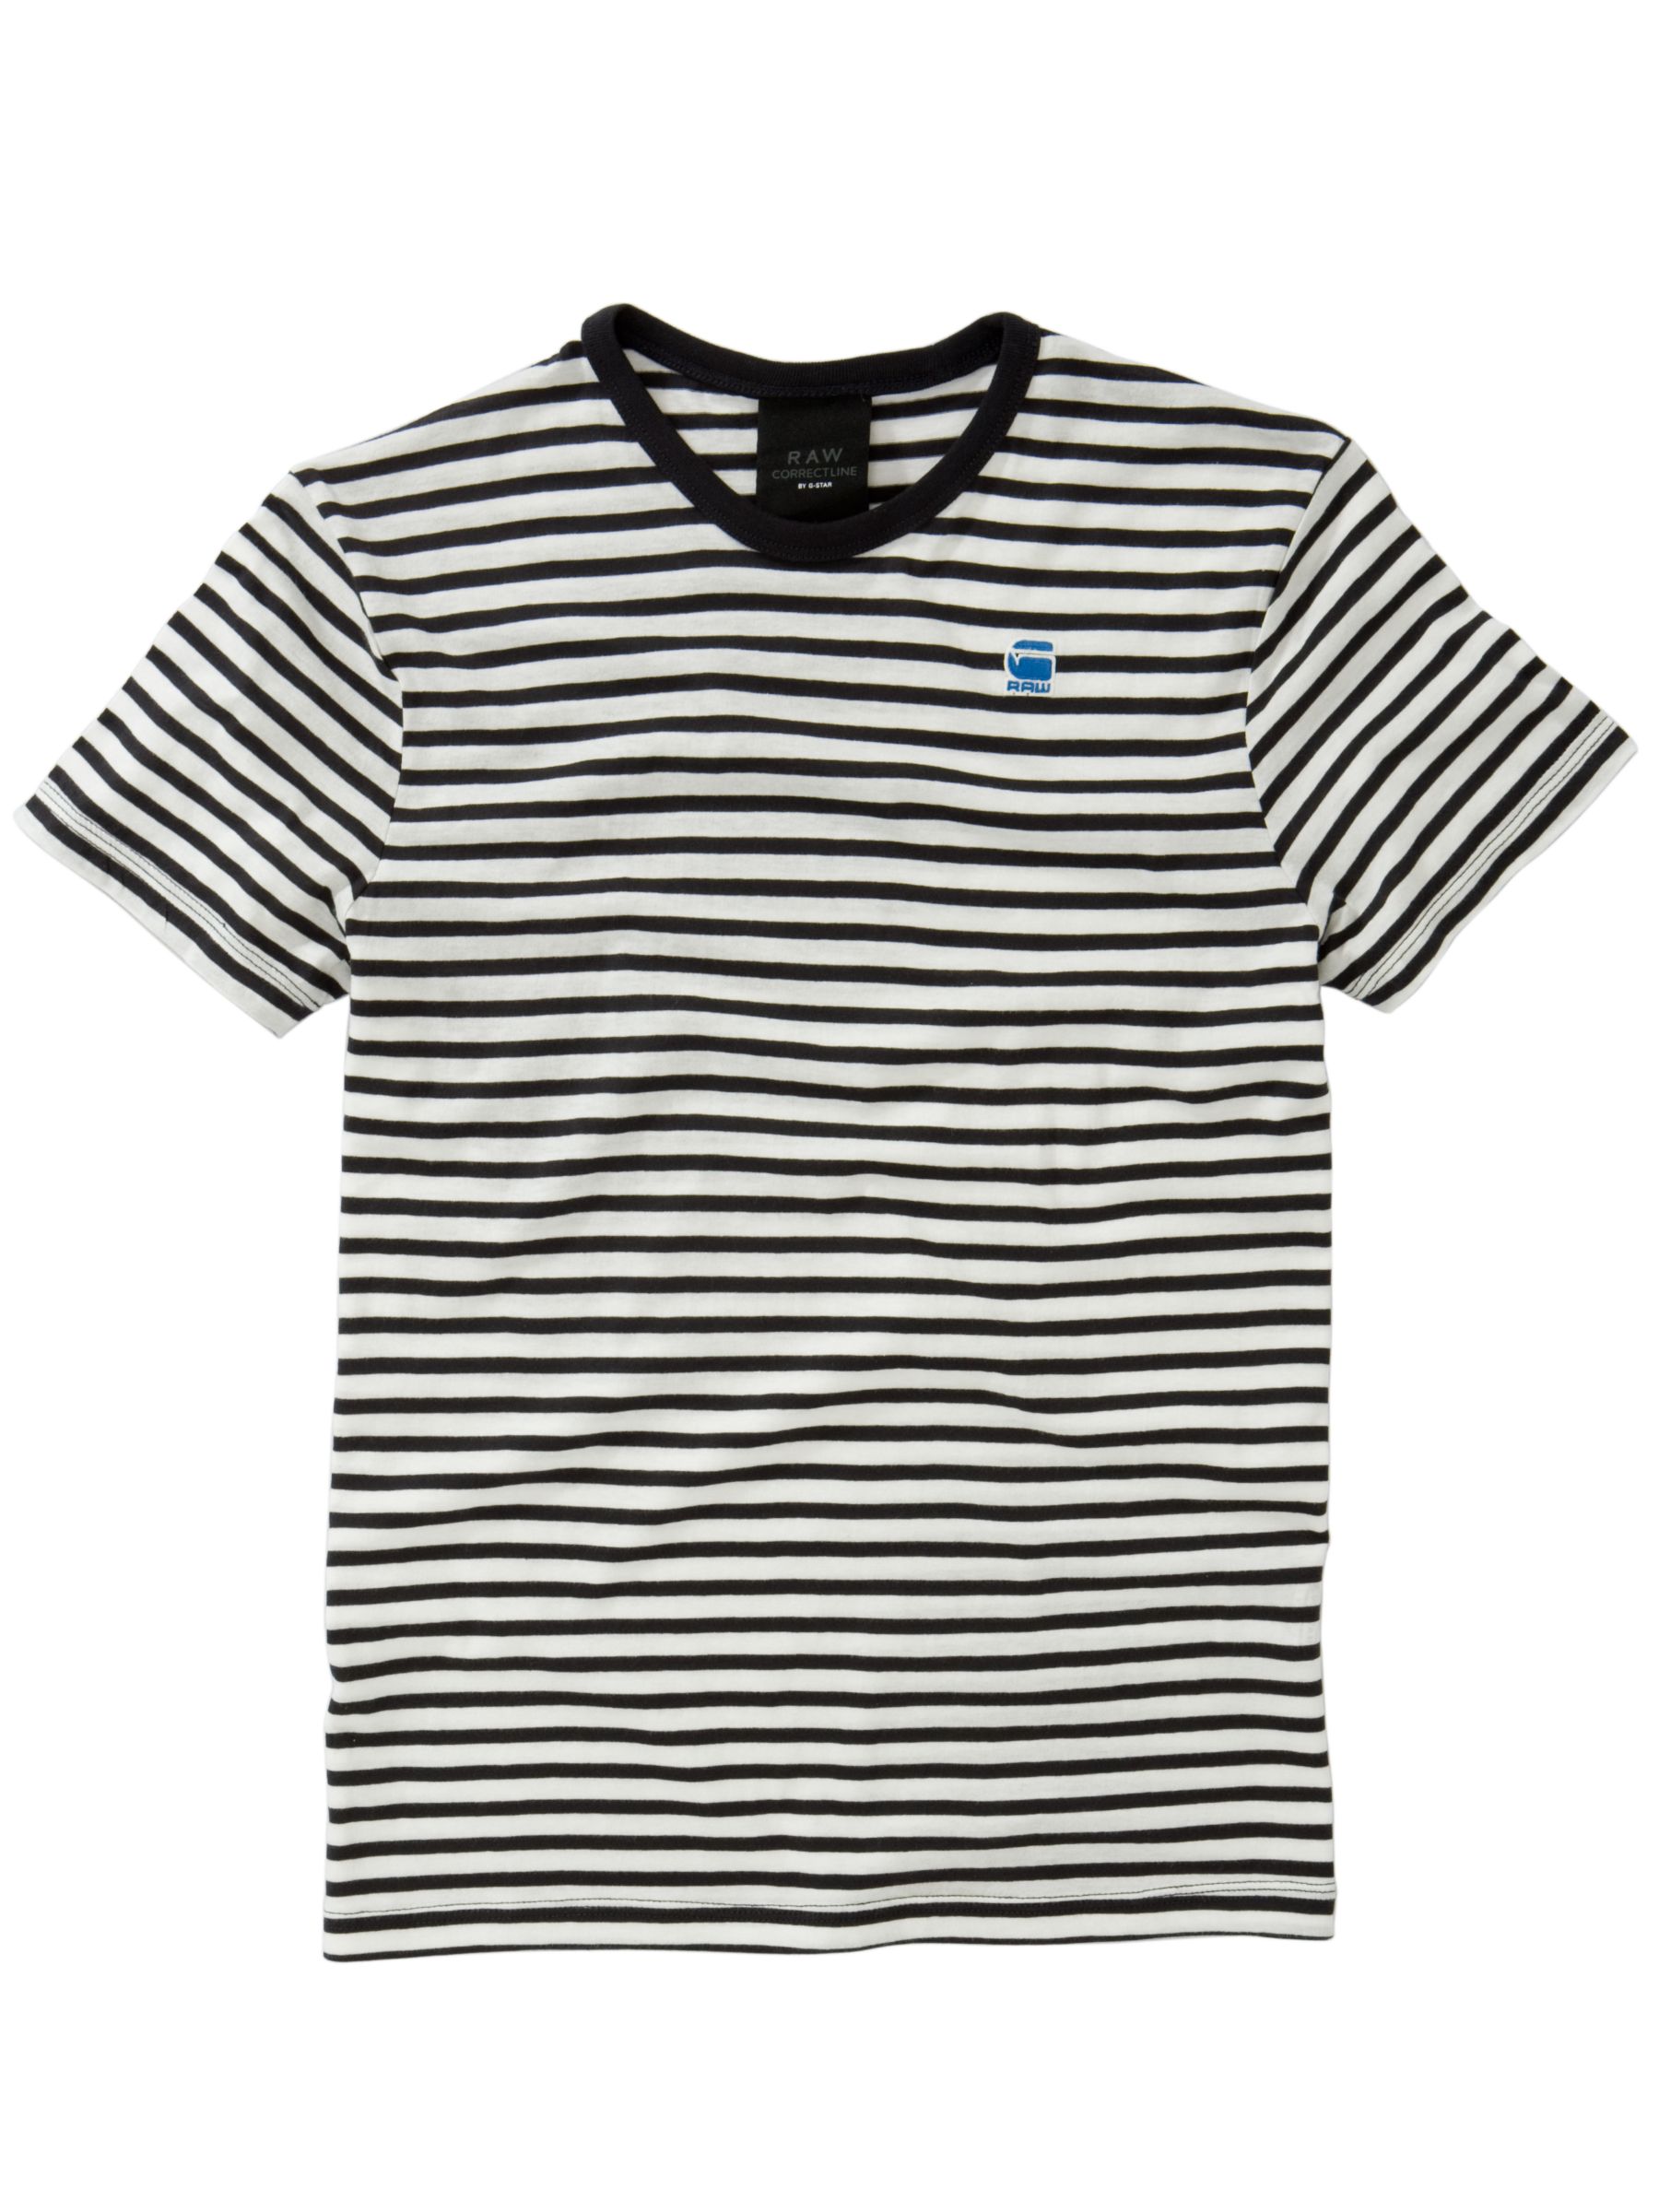 Breton Stripe Short Sleeve T-Shirt,